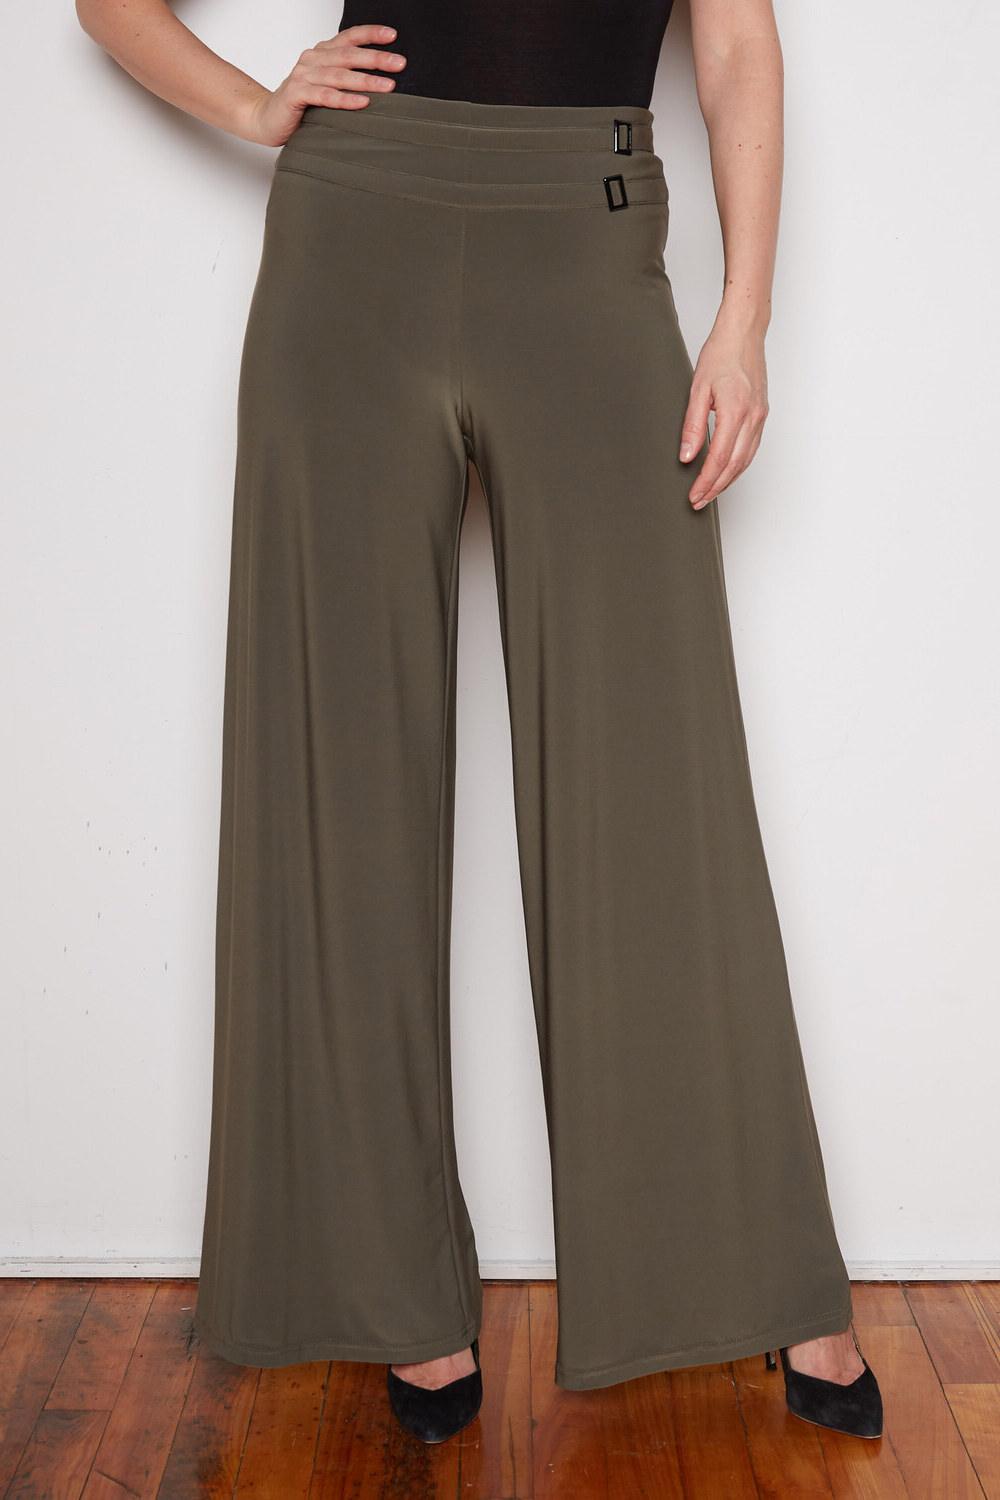 Joseph Ribkoff pantalon style 201482. Avocat 183